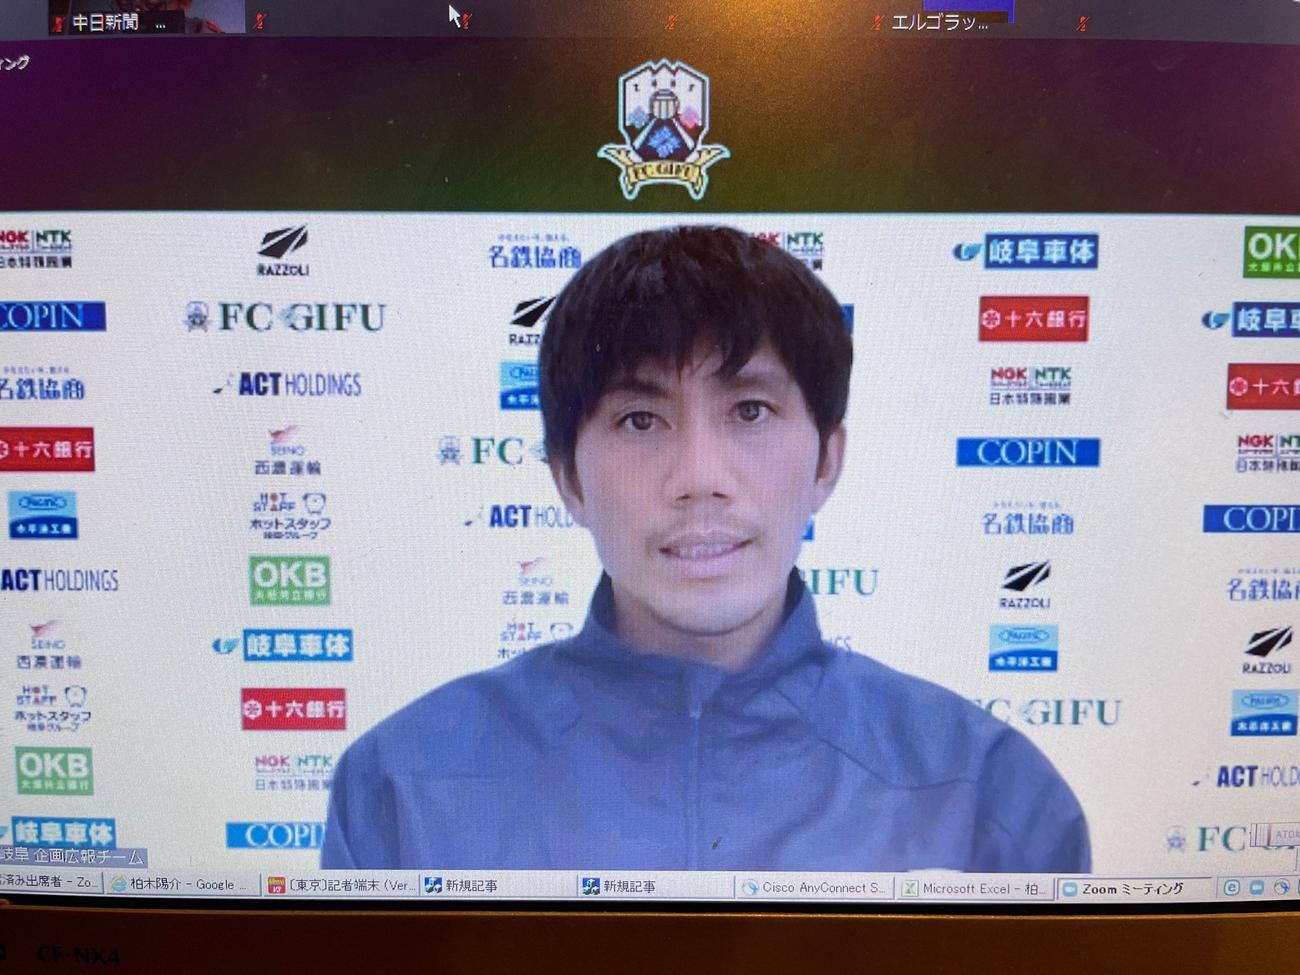 J3岐阜へ完全移籍し、移籍後初の取材に応じた元J1浦和で元日本代表MF柏木